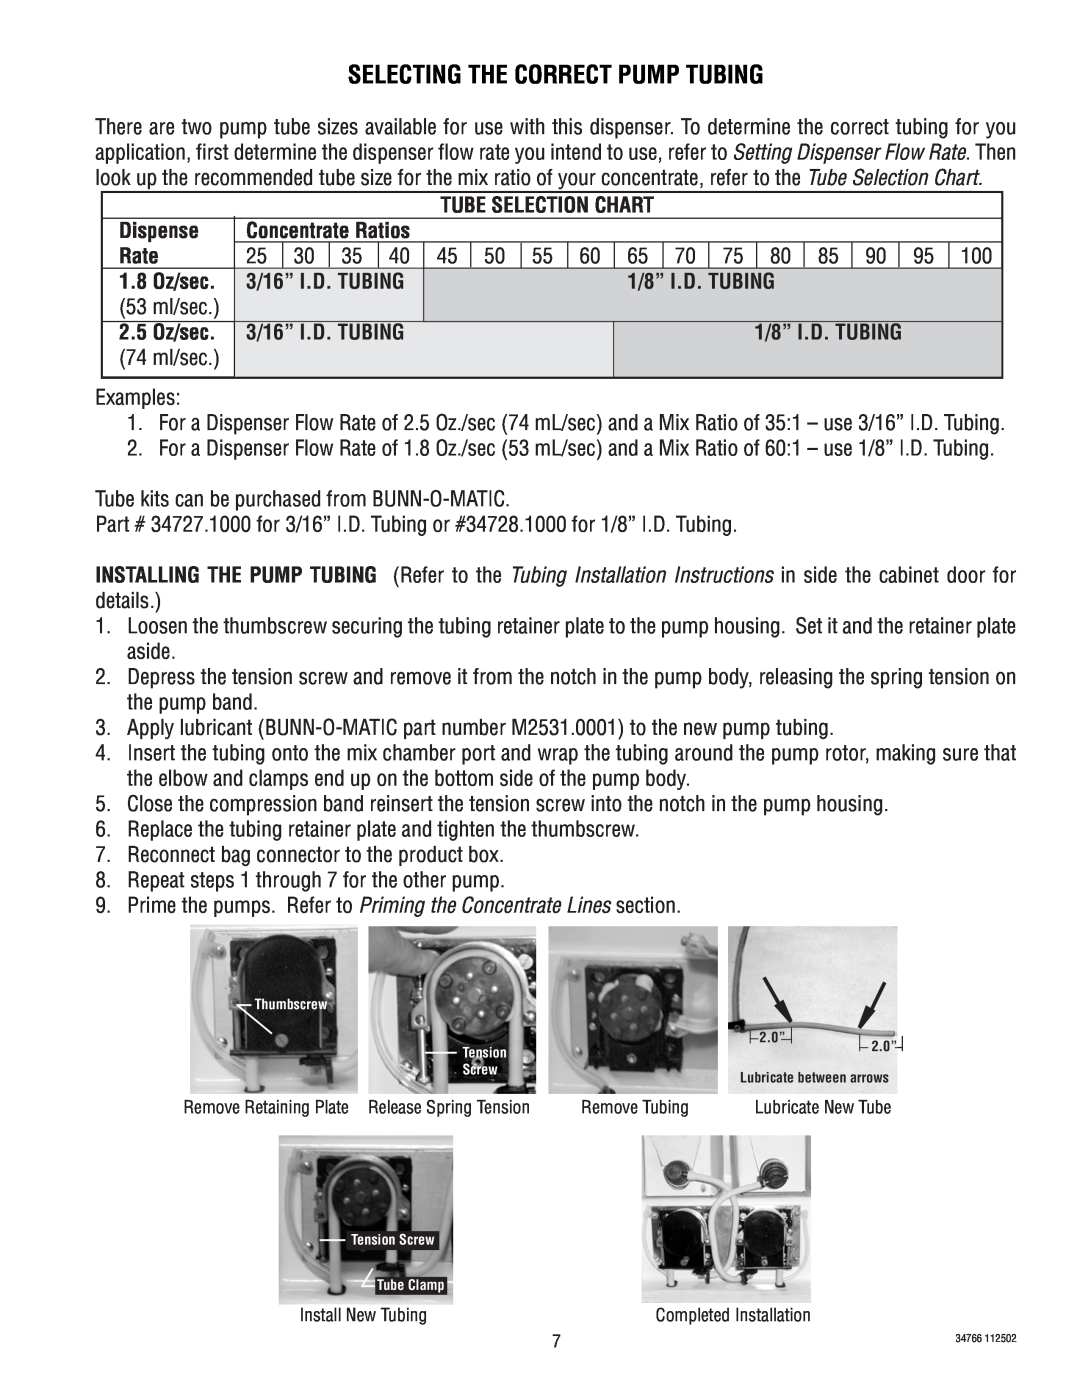 Bunn LCA-2 Selecting The Correct Pump Tubing, Dispense, Rate, 1.8 Oz/sec, 3/16” I.D. TUBING, 1/8” I.D. TUBING, 2.5 Oz/sec 